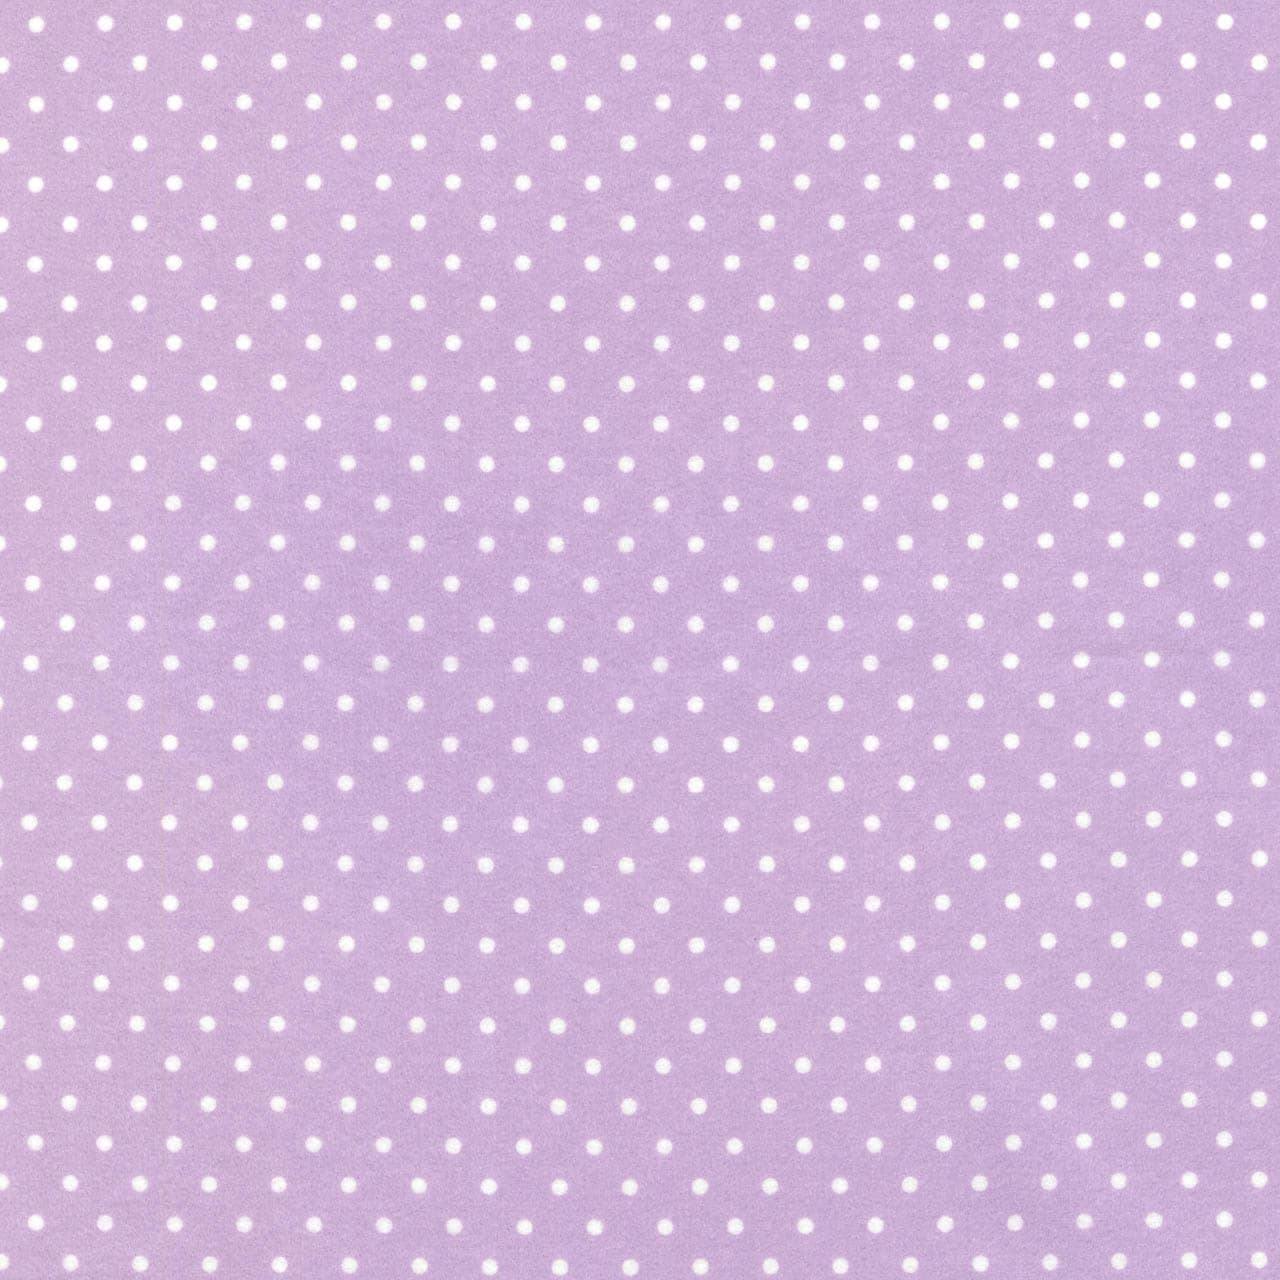 Polka dots on purple brushed cotton - Robert Kaufman